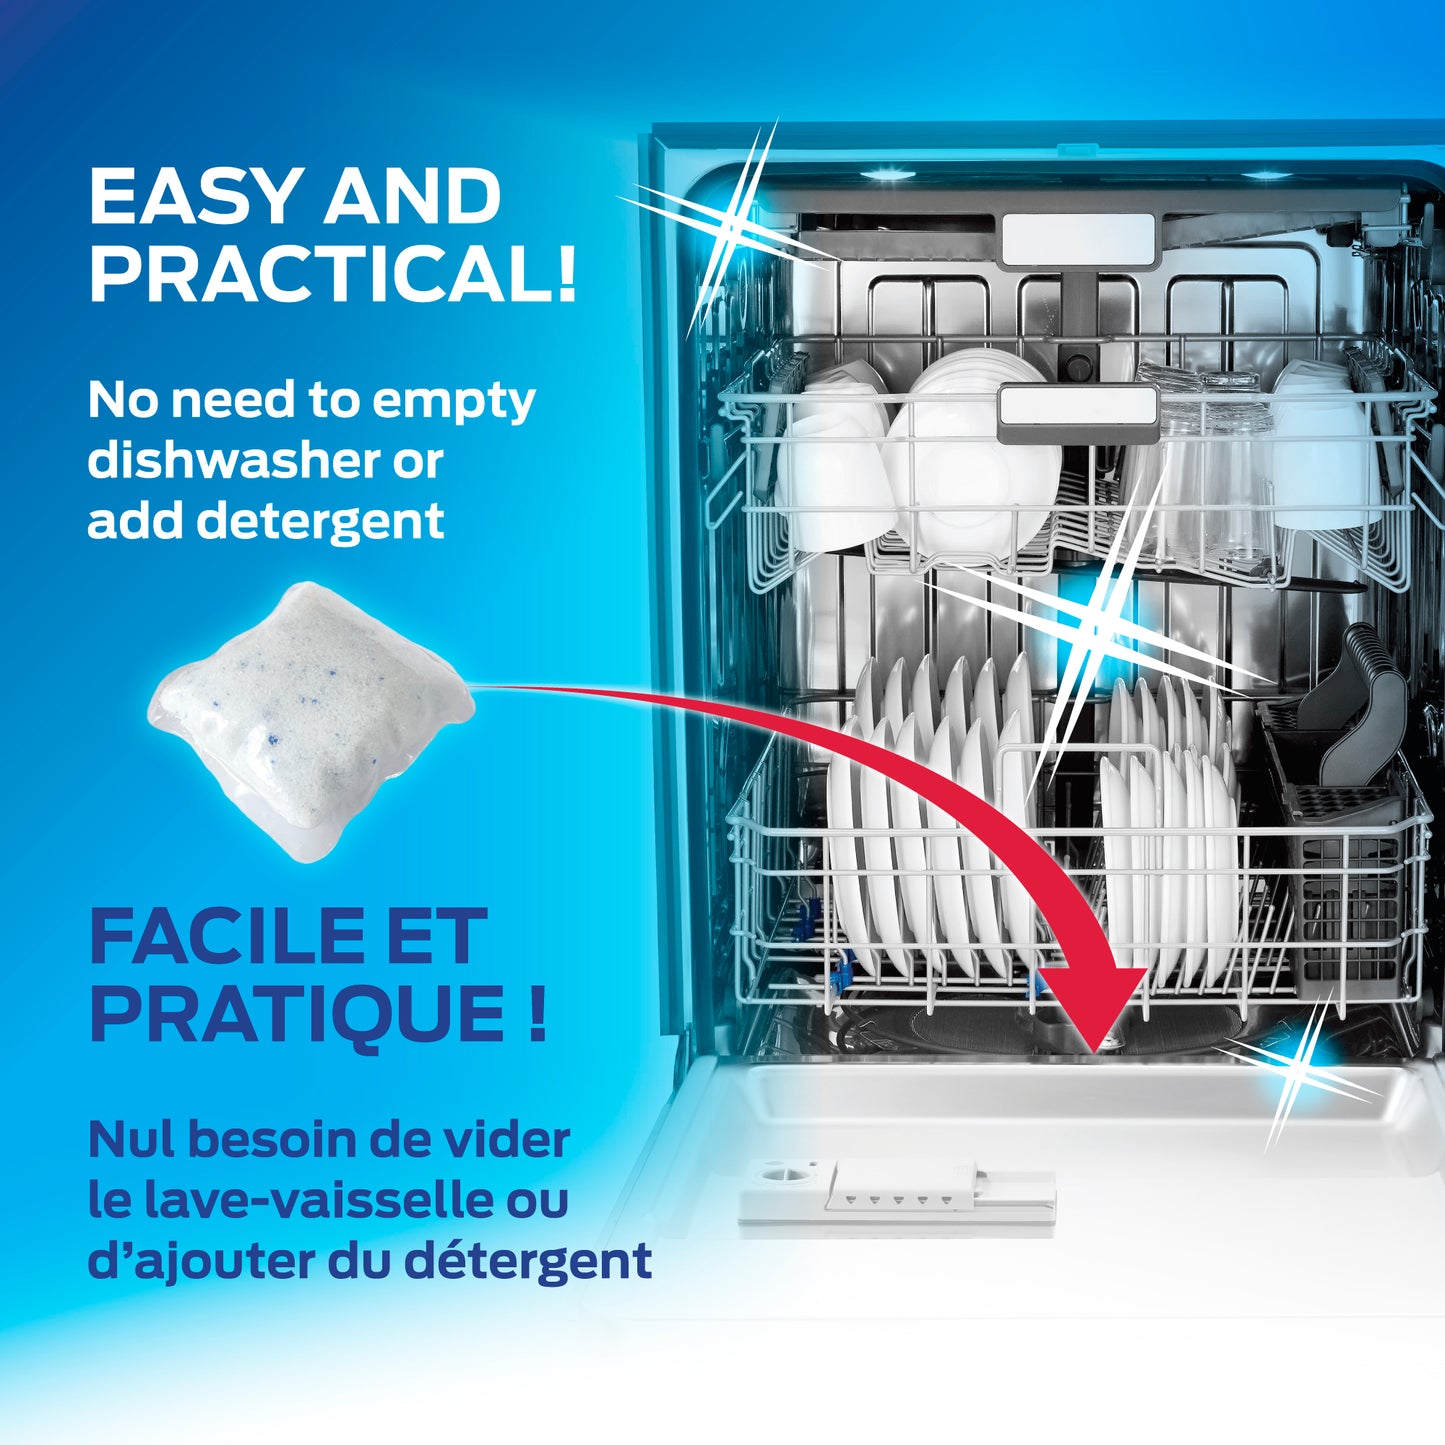 Dishwasher Cleaner - 6 Soluble Tablets 